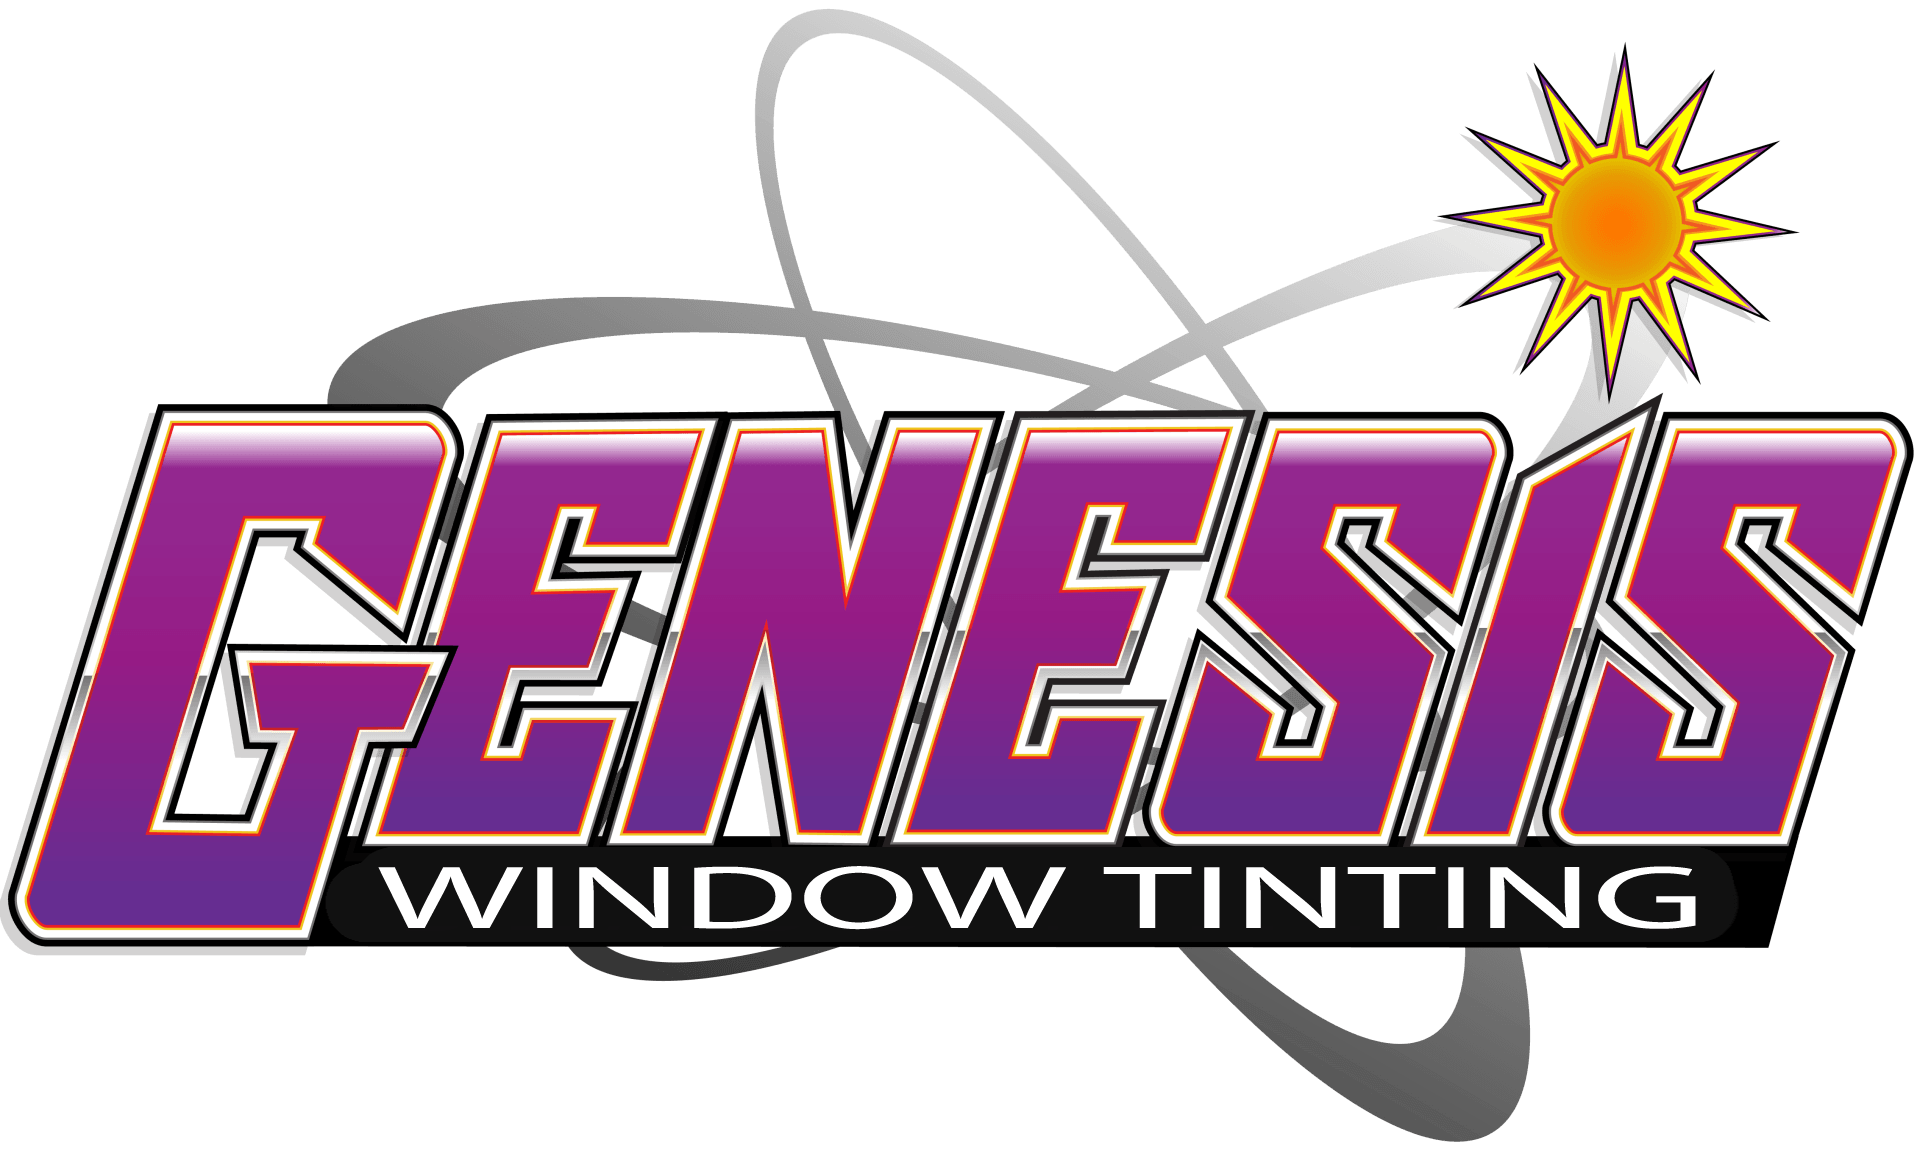 genesis window tinting logo